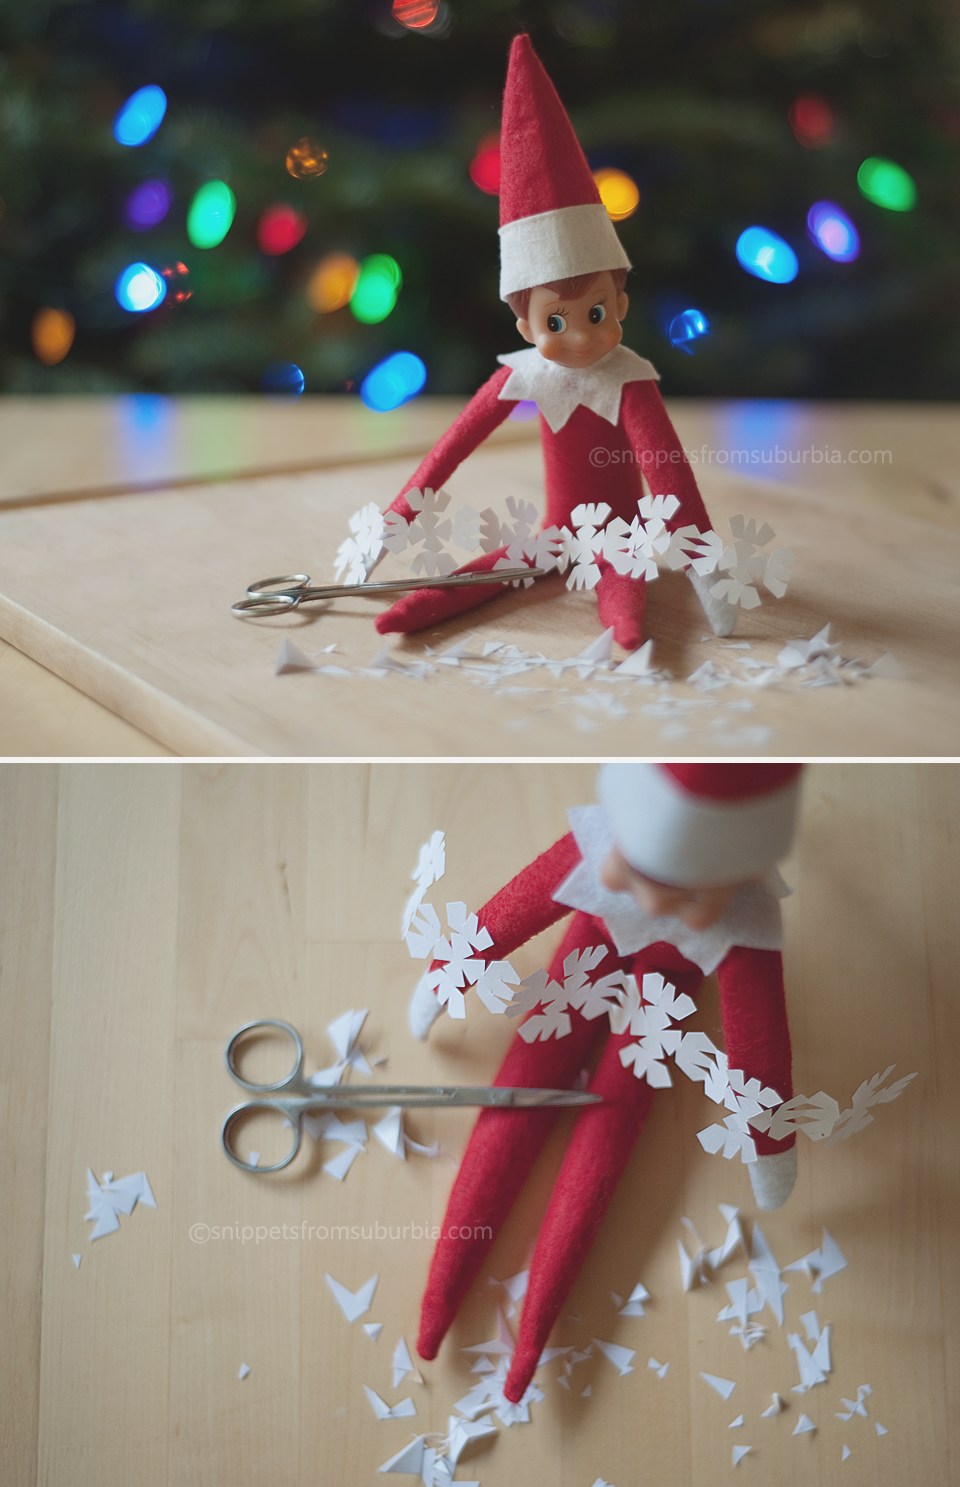 Elf on the Shelf, December 5th